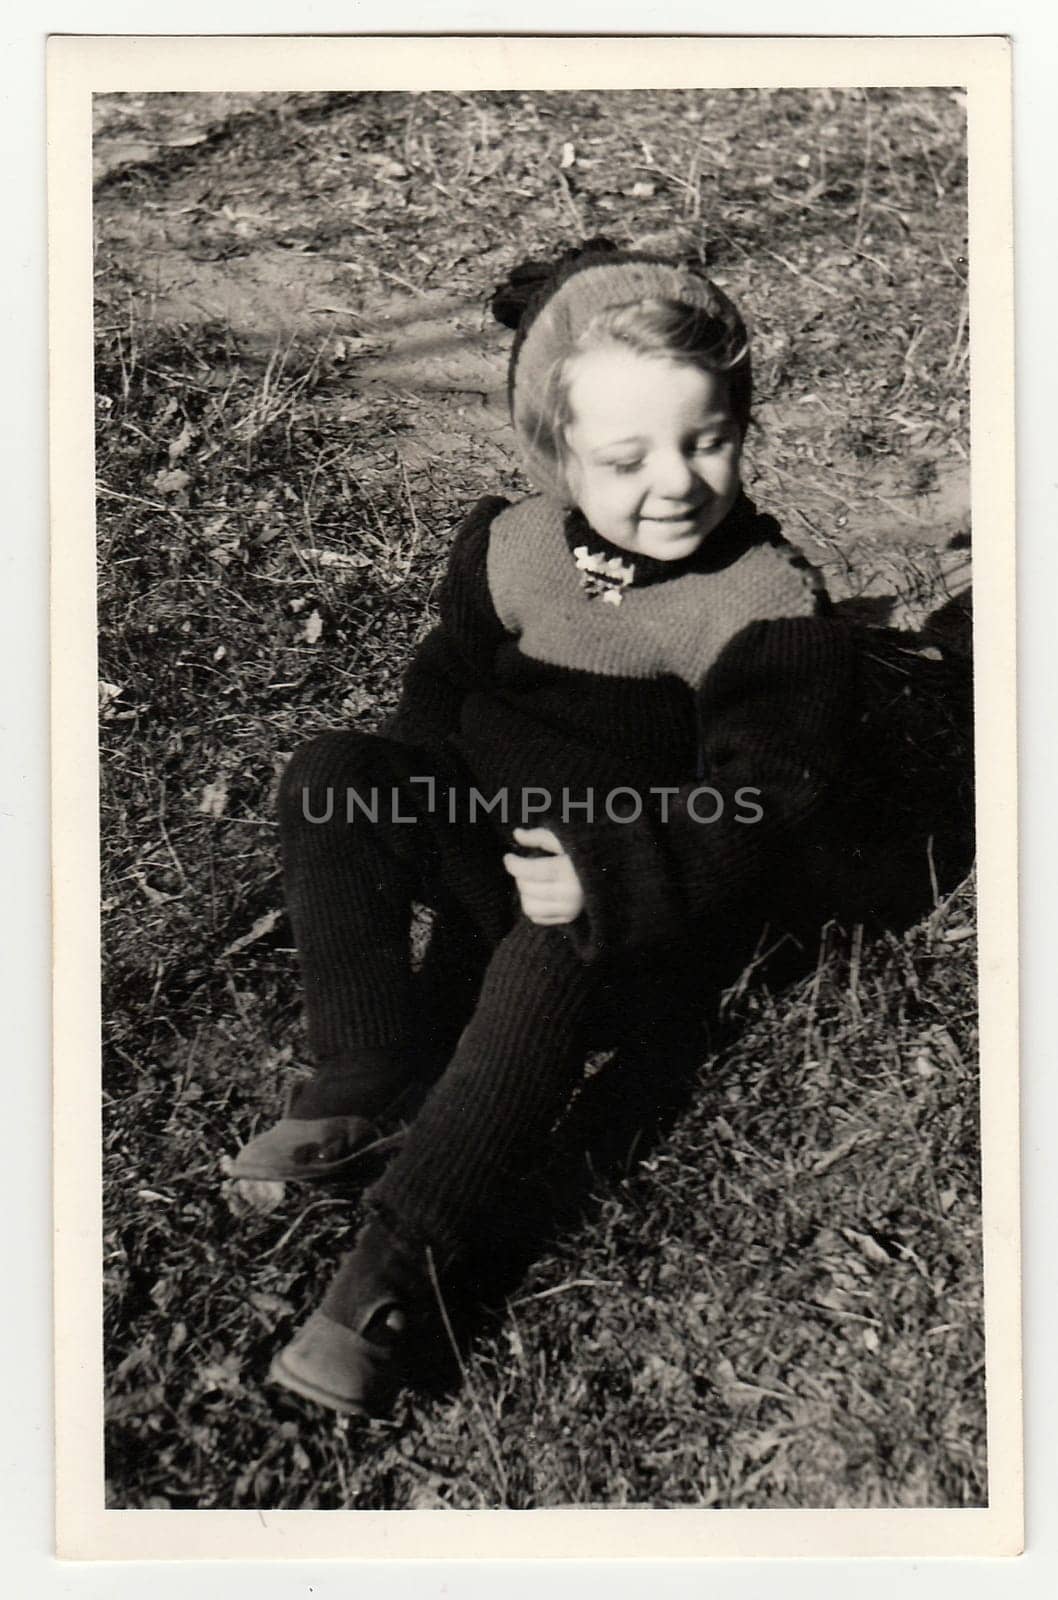 HODONIN, THE CZECHOSLOVAK REPUBLIC, CIRCA 1941: Vintage photo shows a small girl sits on grass, circa 1941